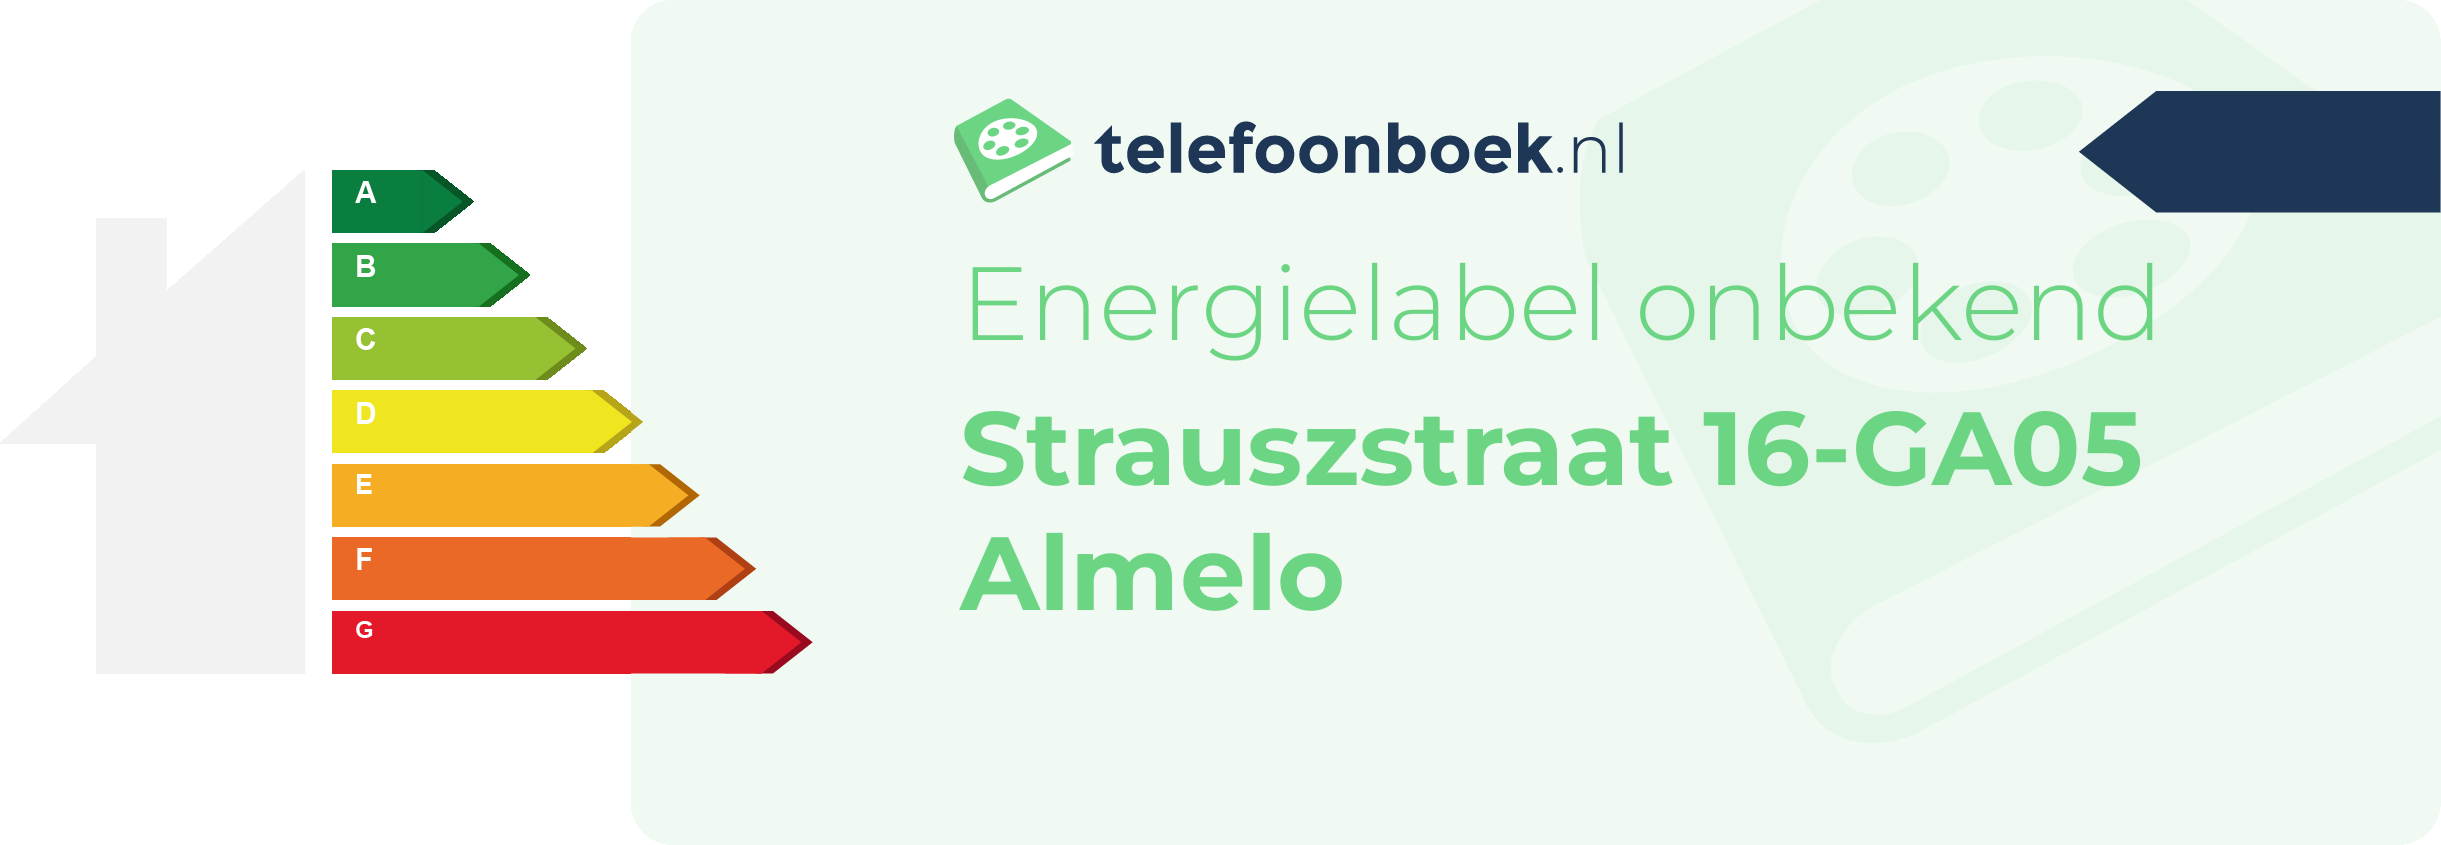 Energielabel Strauszstraat 16-GA05 Almelo